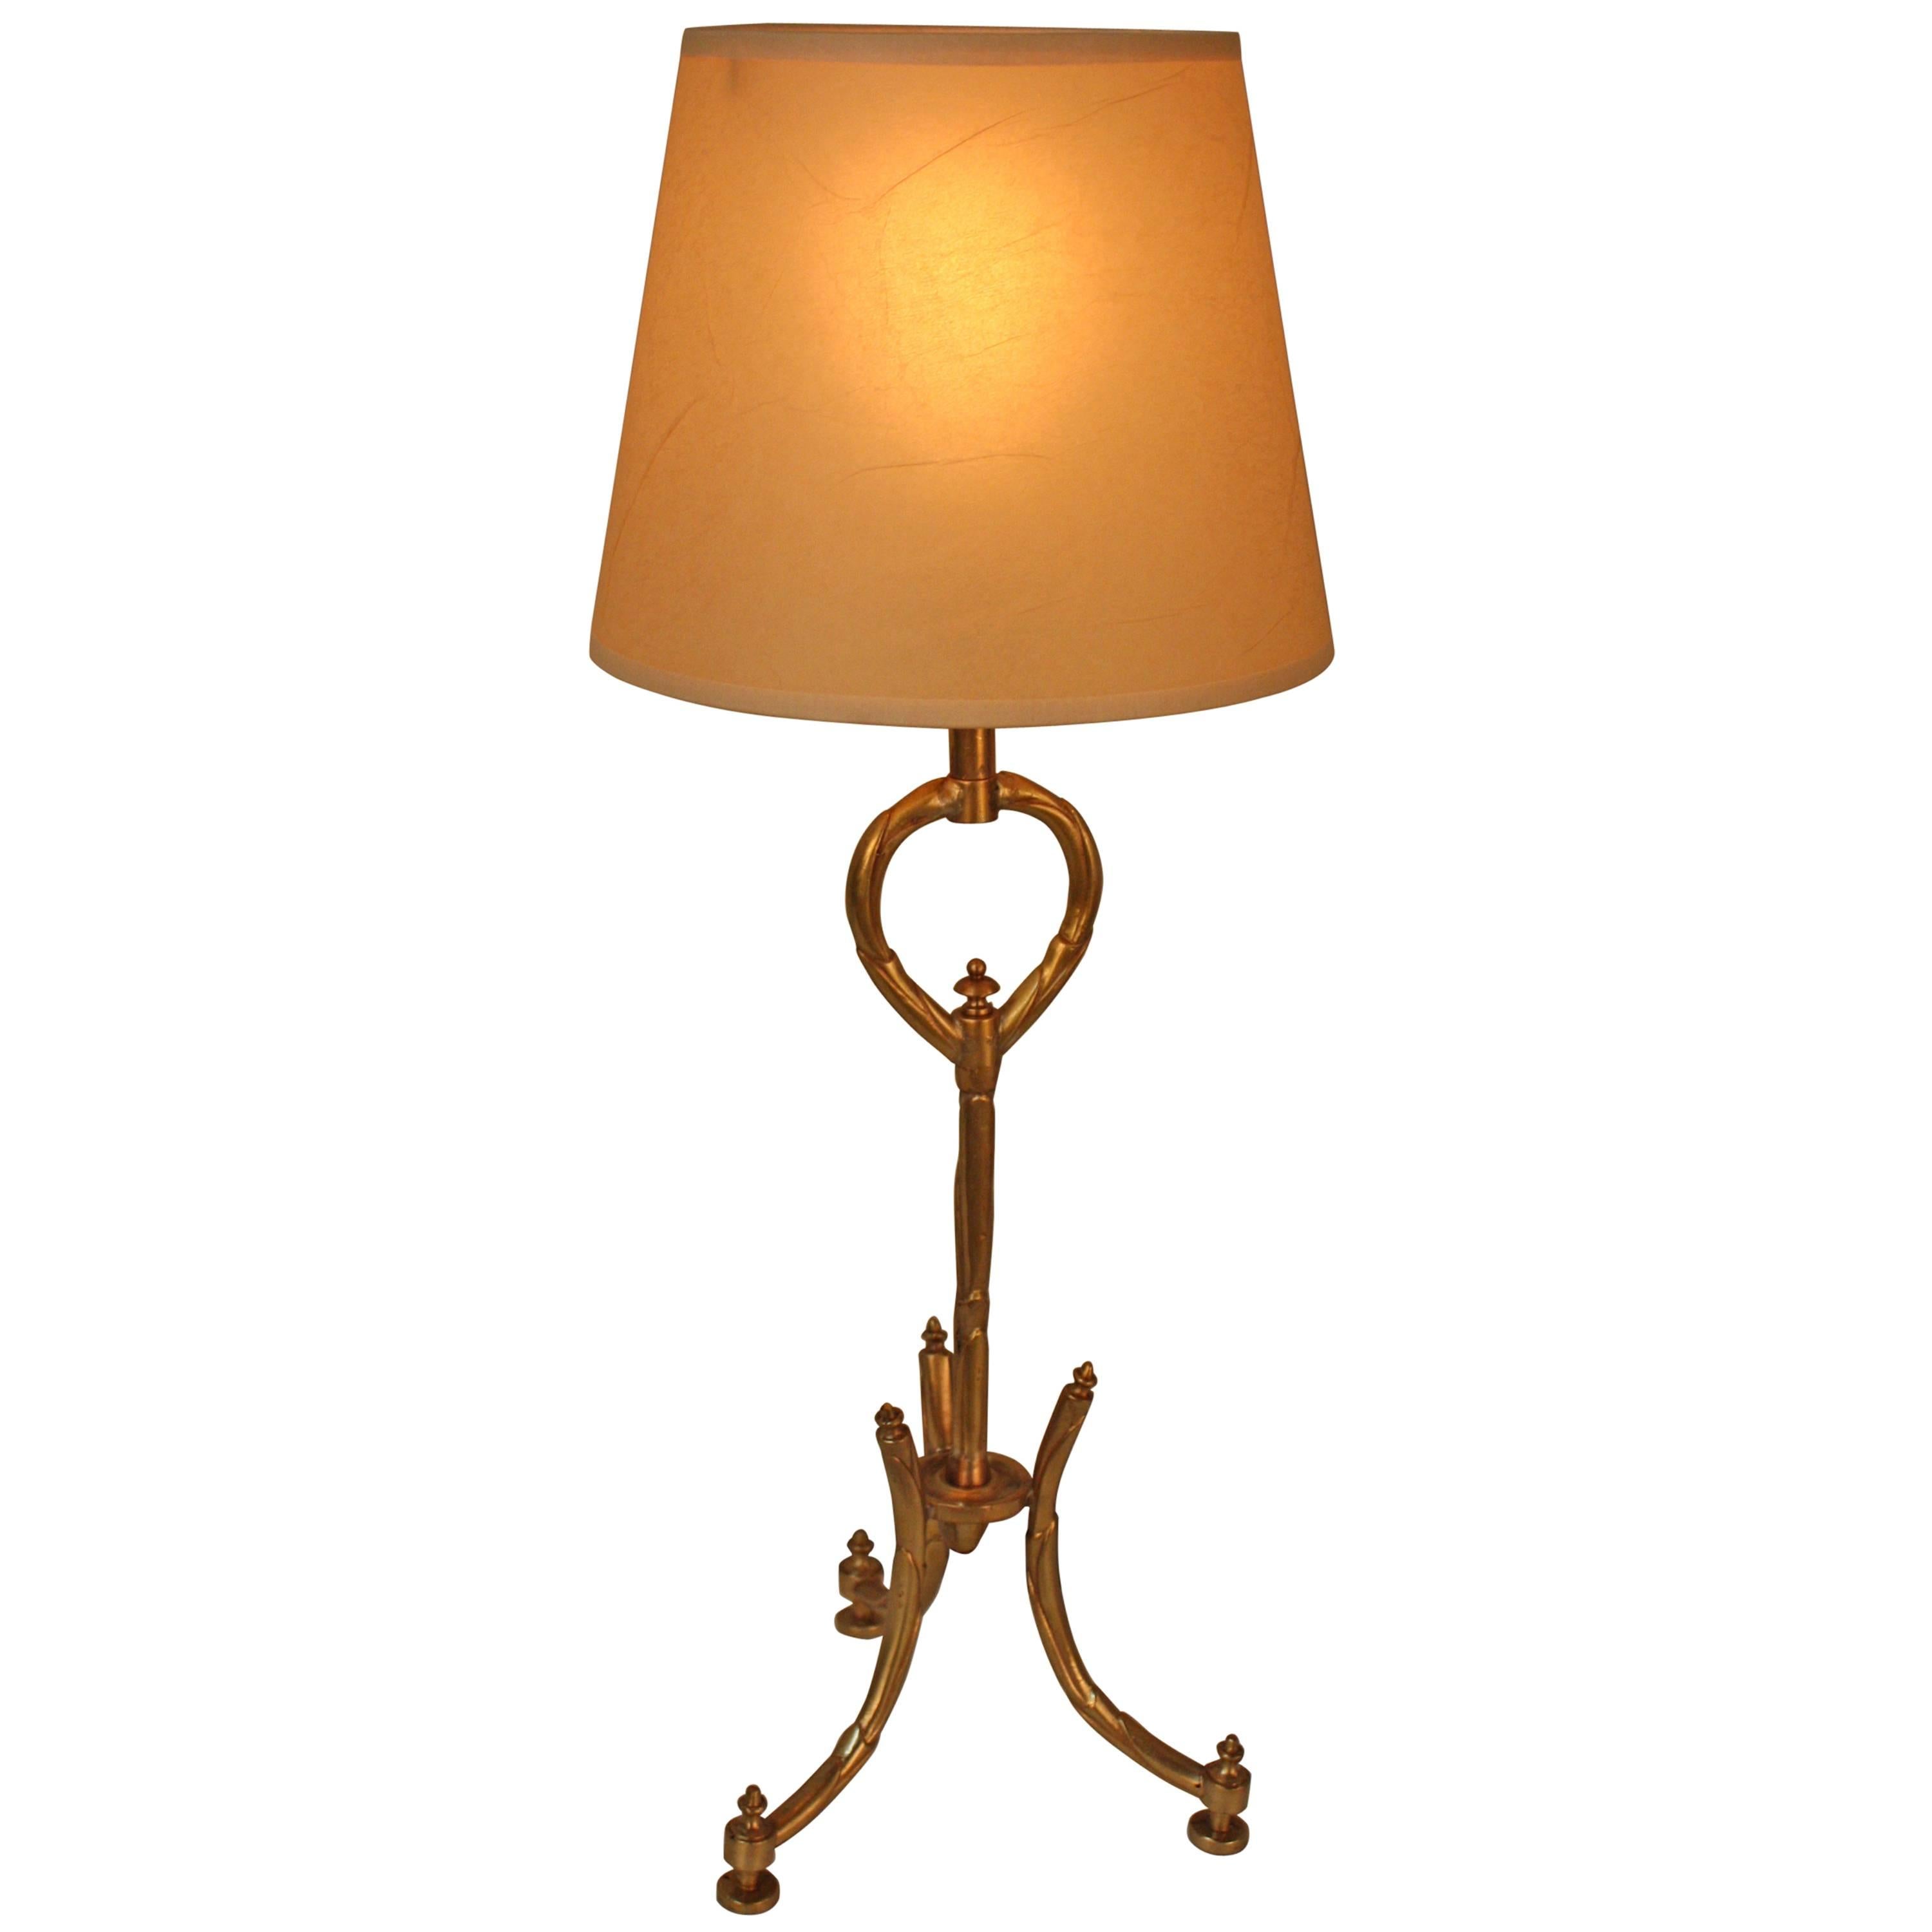 Faux Bamboo Design Spanish Table Lamp